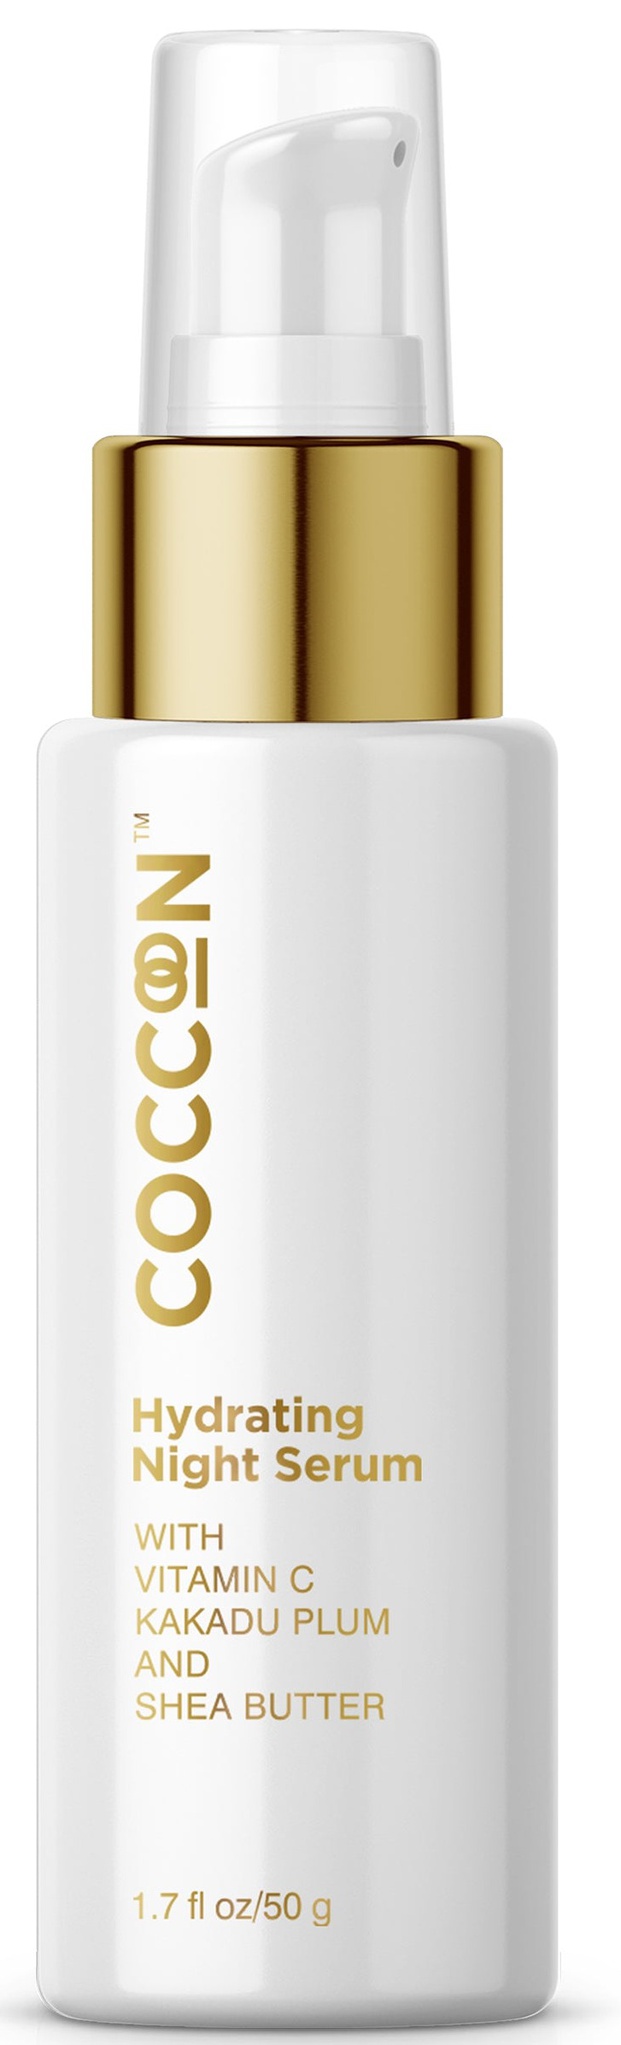 Coccoon Hydrating Night Serum